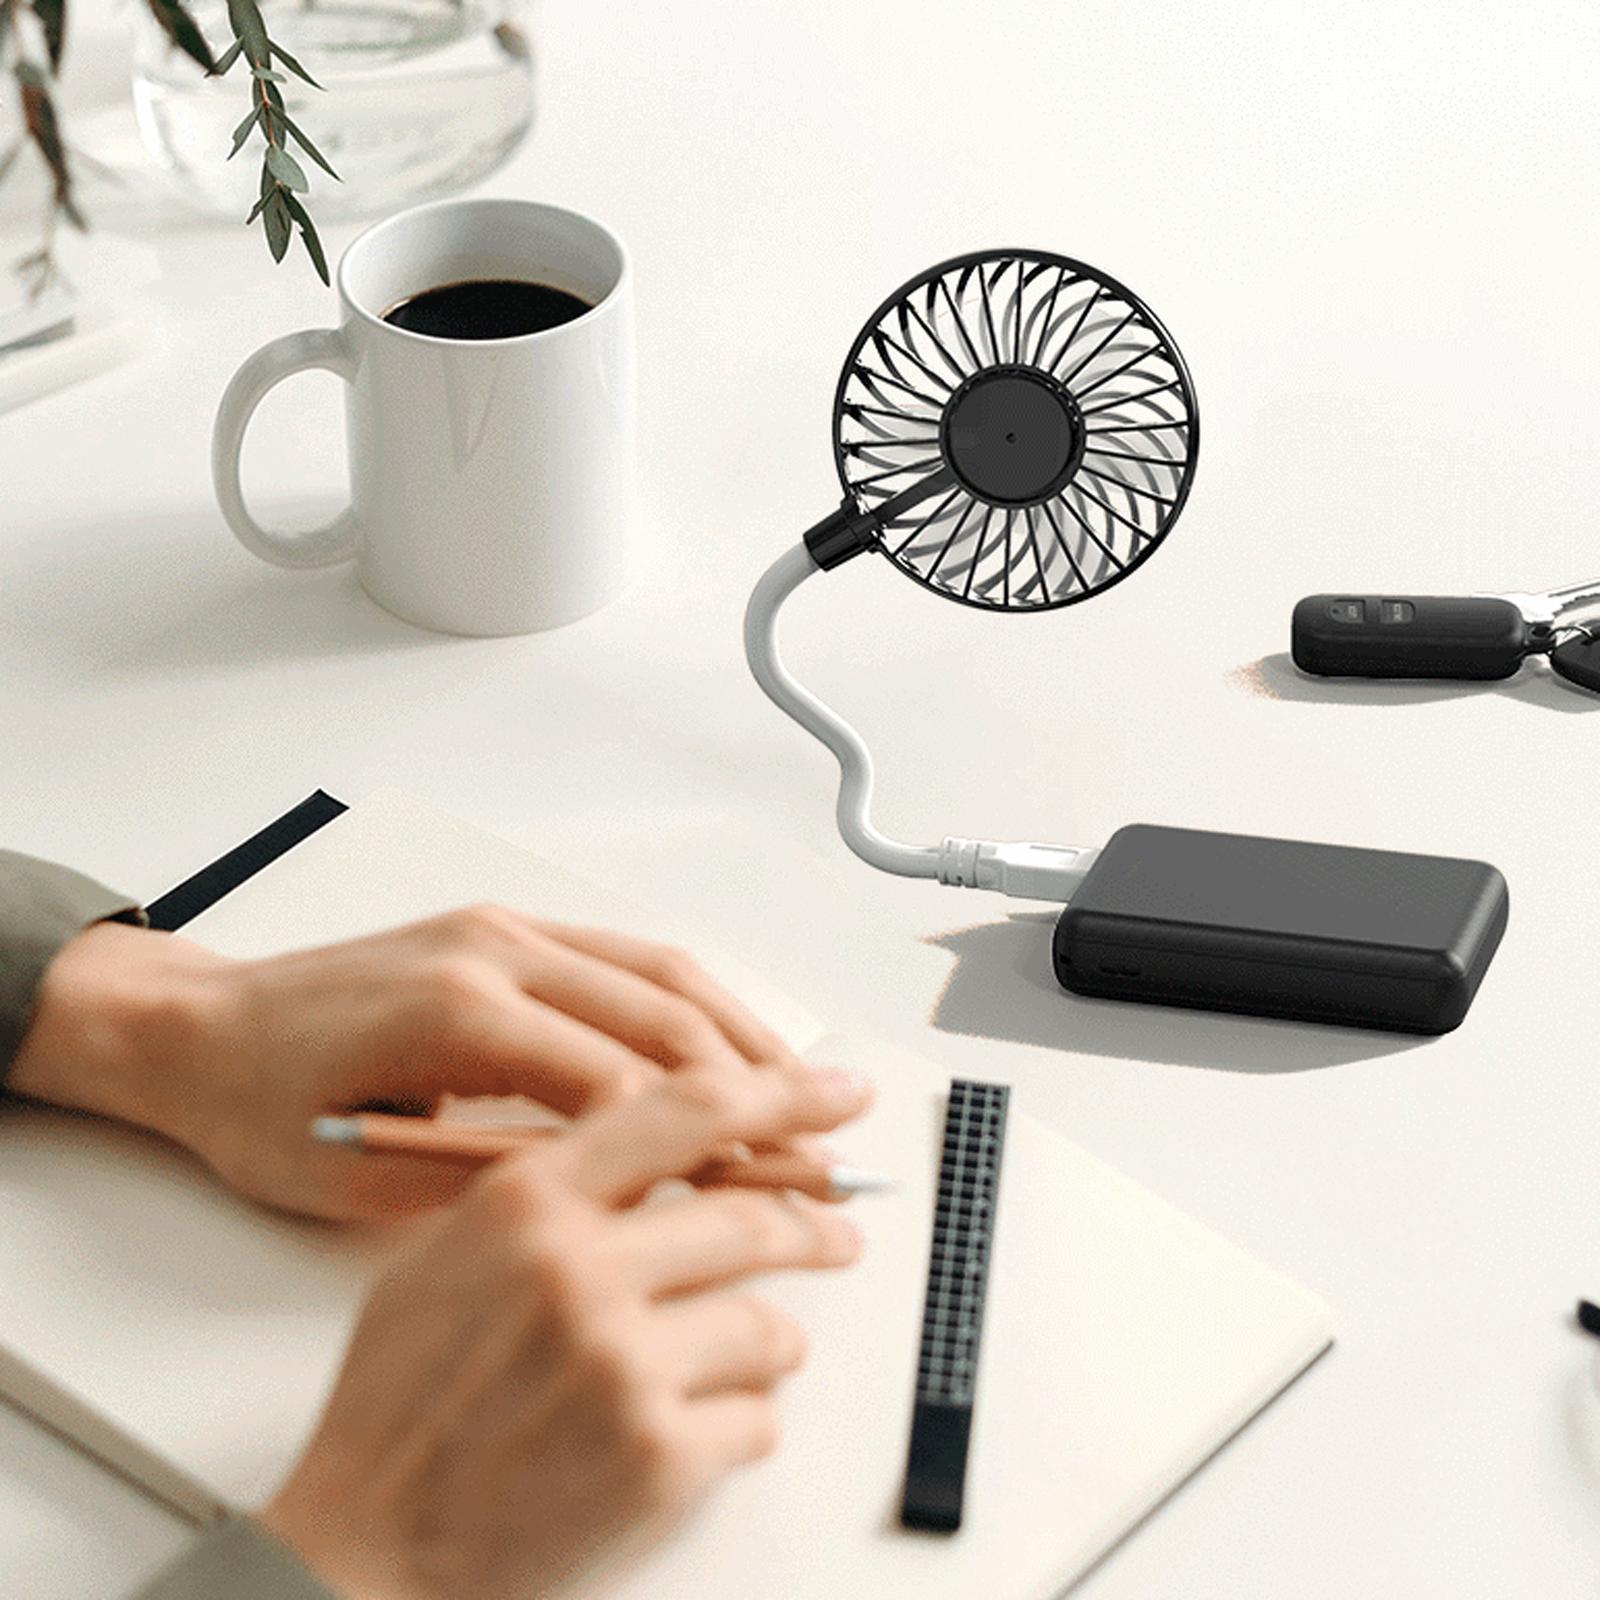 Mini Portable USB Fan Desk Fan Bendable Cable for Travel Commute Lightweight Black 35x8x2.8cm